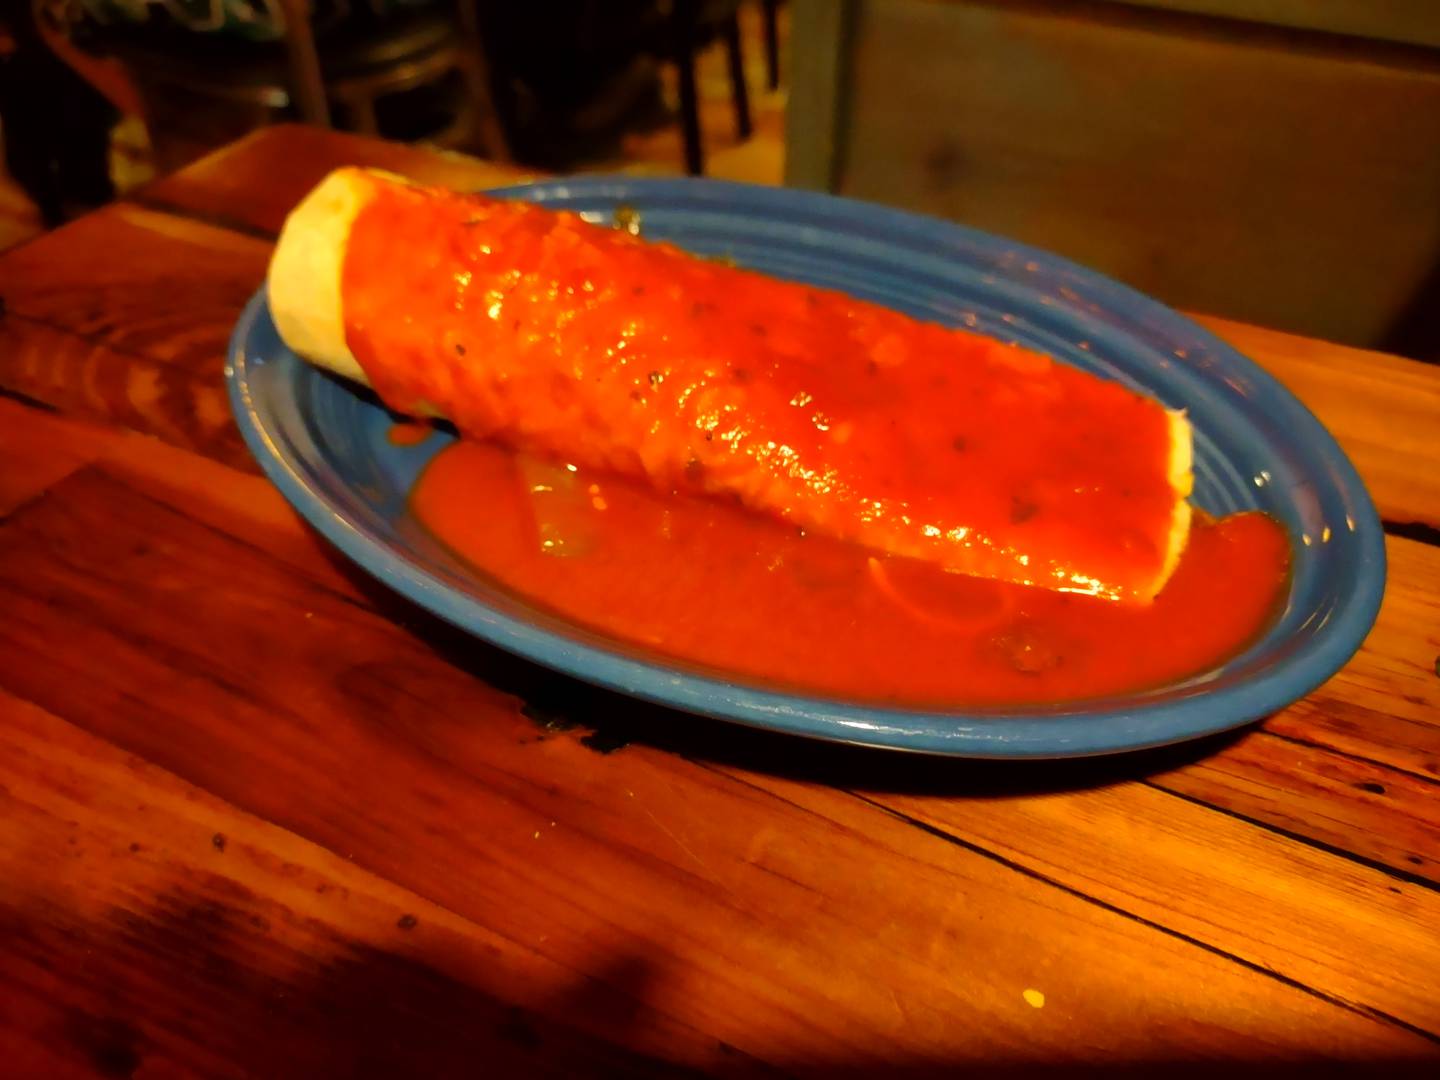 A steak burrito is covered in red sauce at La Fondita Mexican Grill in Ottawa.